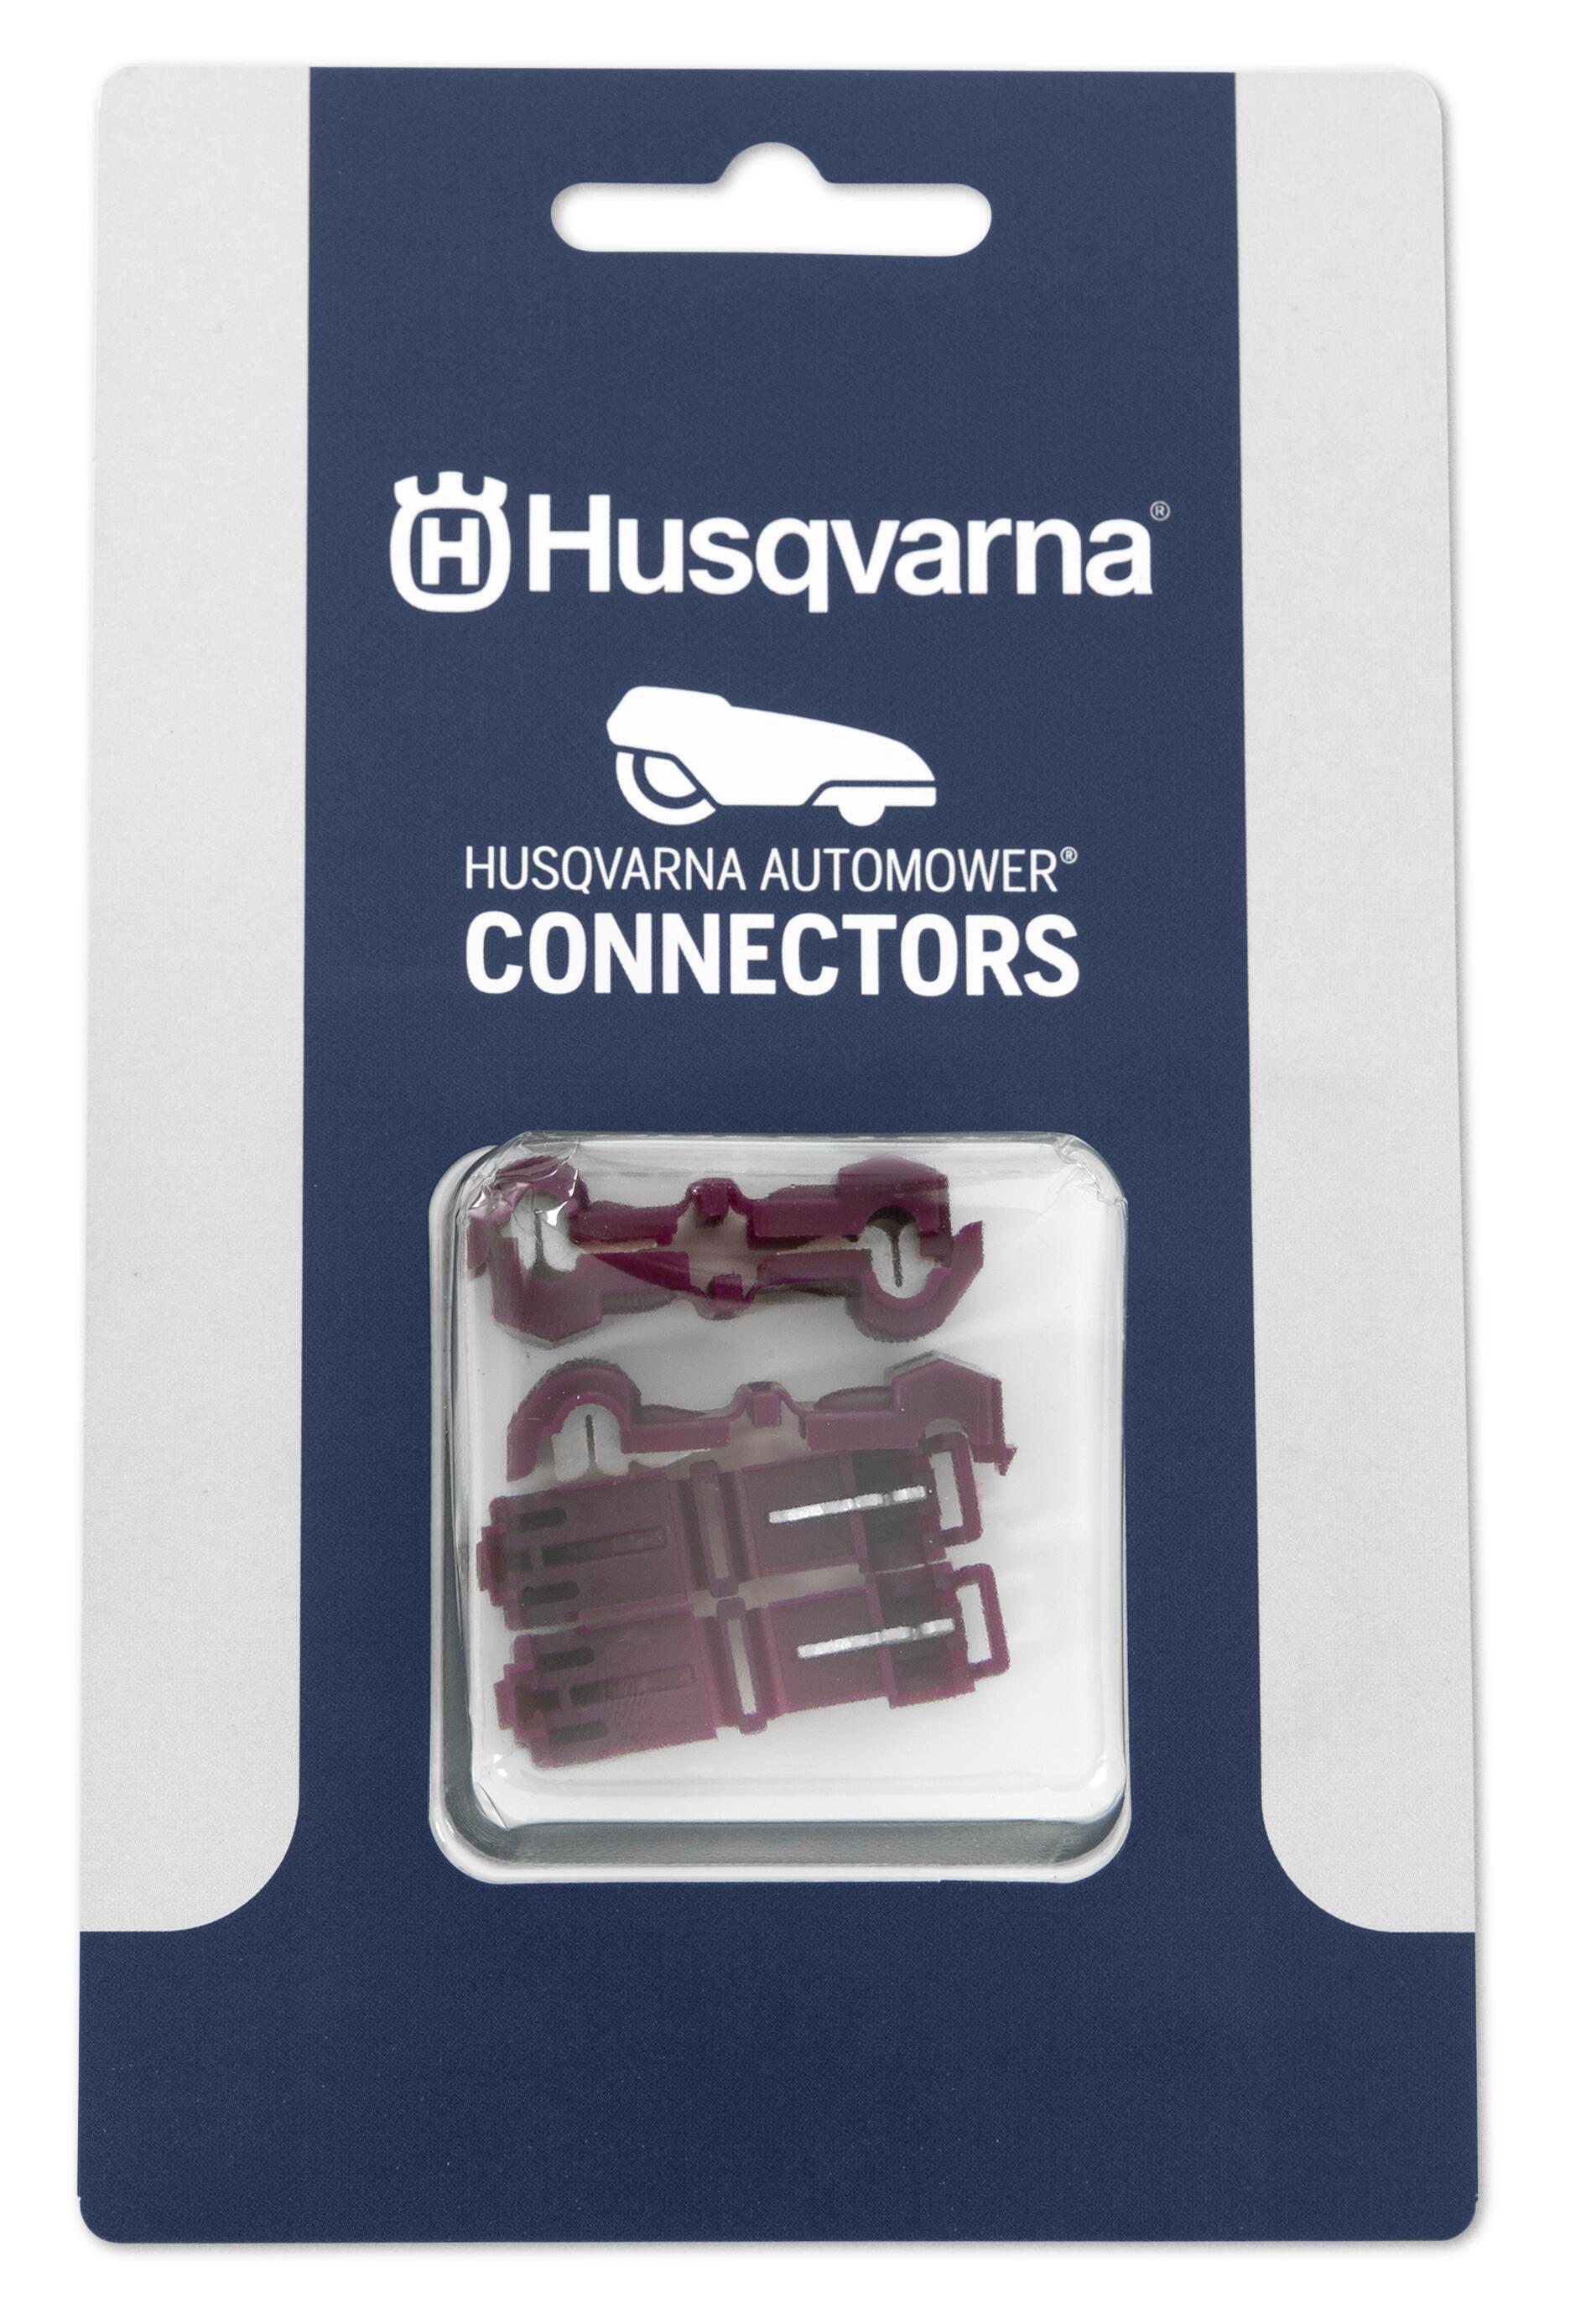 Husqvarna Connector 5 st, (tbv laadstation) blisterverpakking